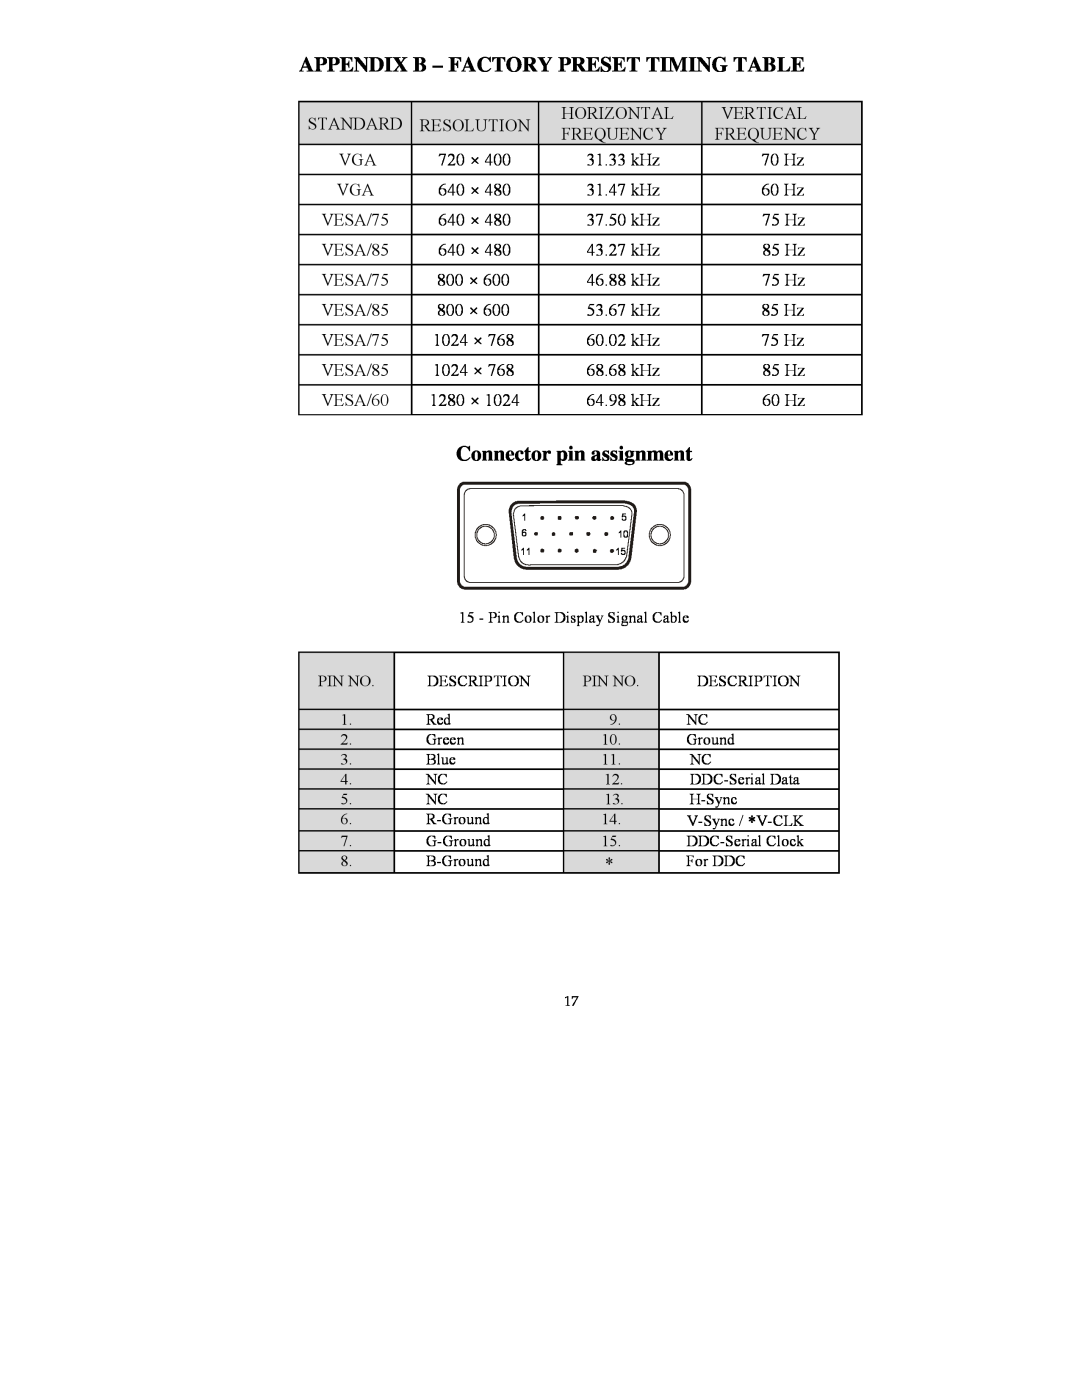 Lenovo E54 manual Appendix B - Factory Preset Timing Table, Connector pin assignment 